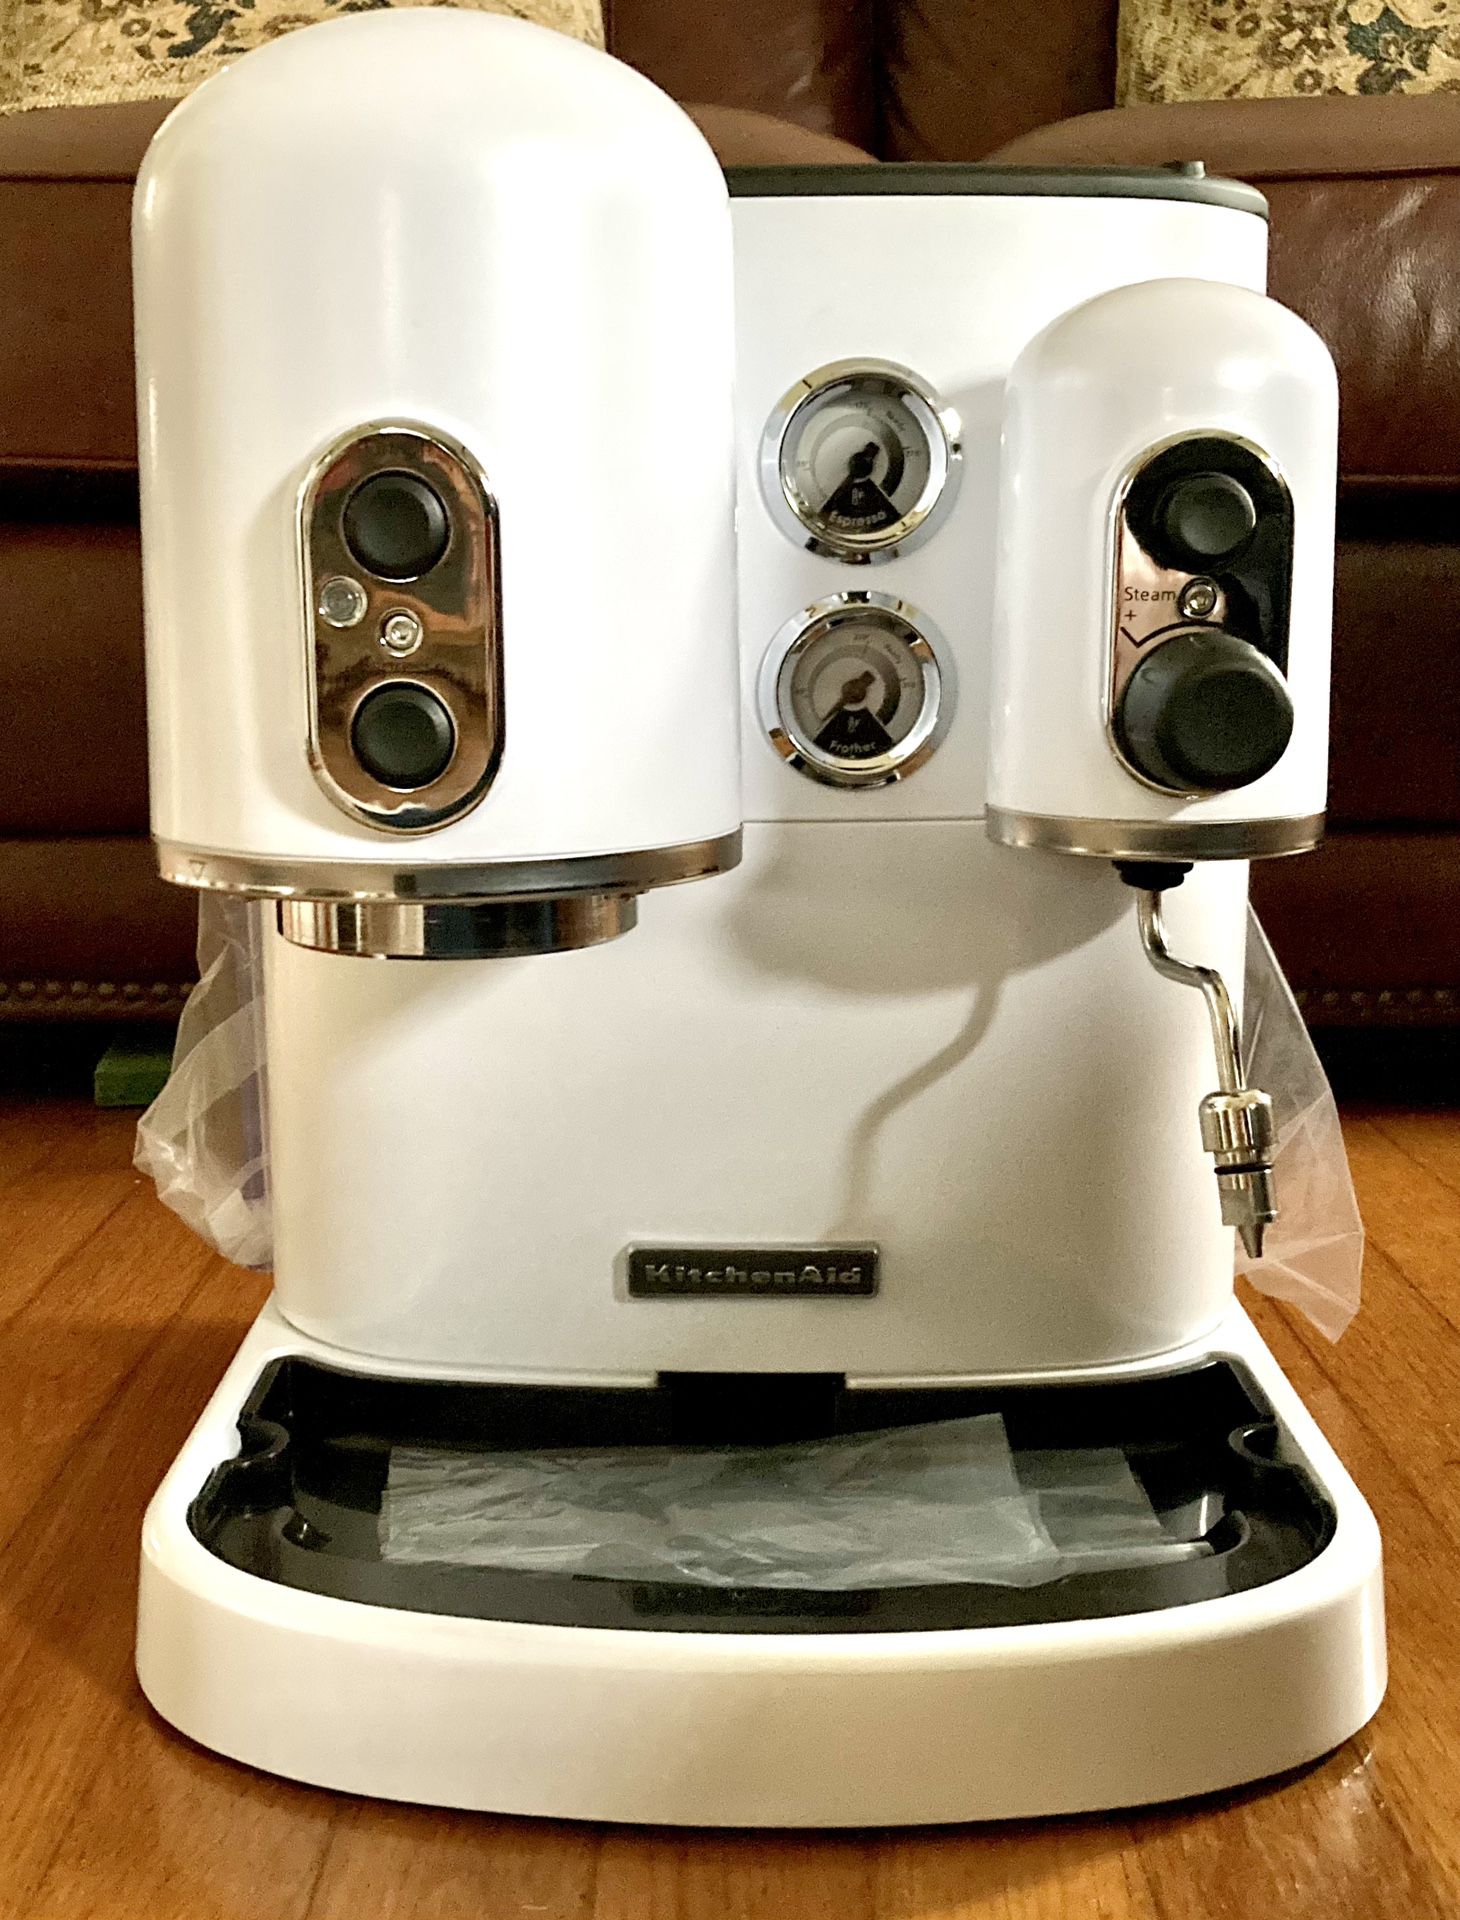 Kitchen Aid Pro Line Dual Boiler Espresso Maker - Trademark Retail